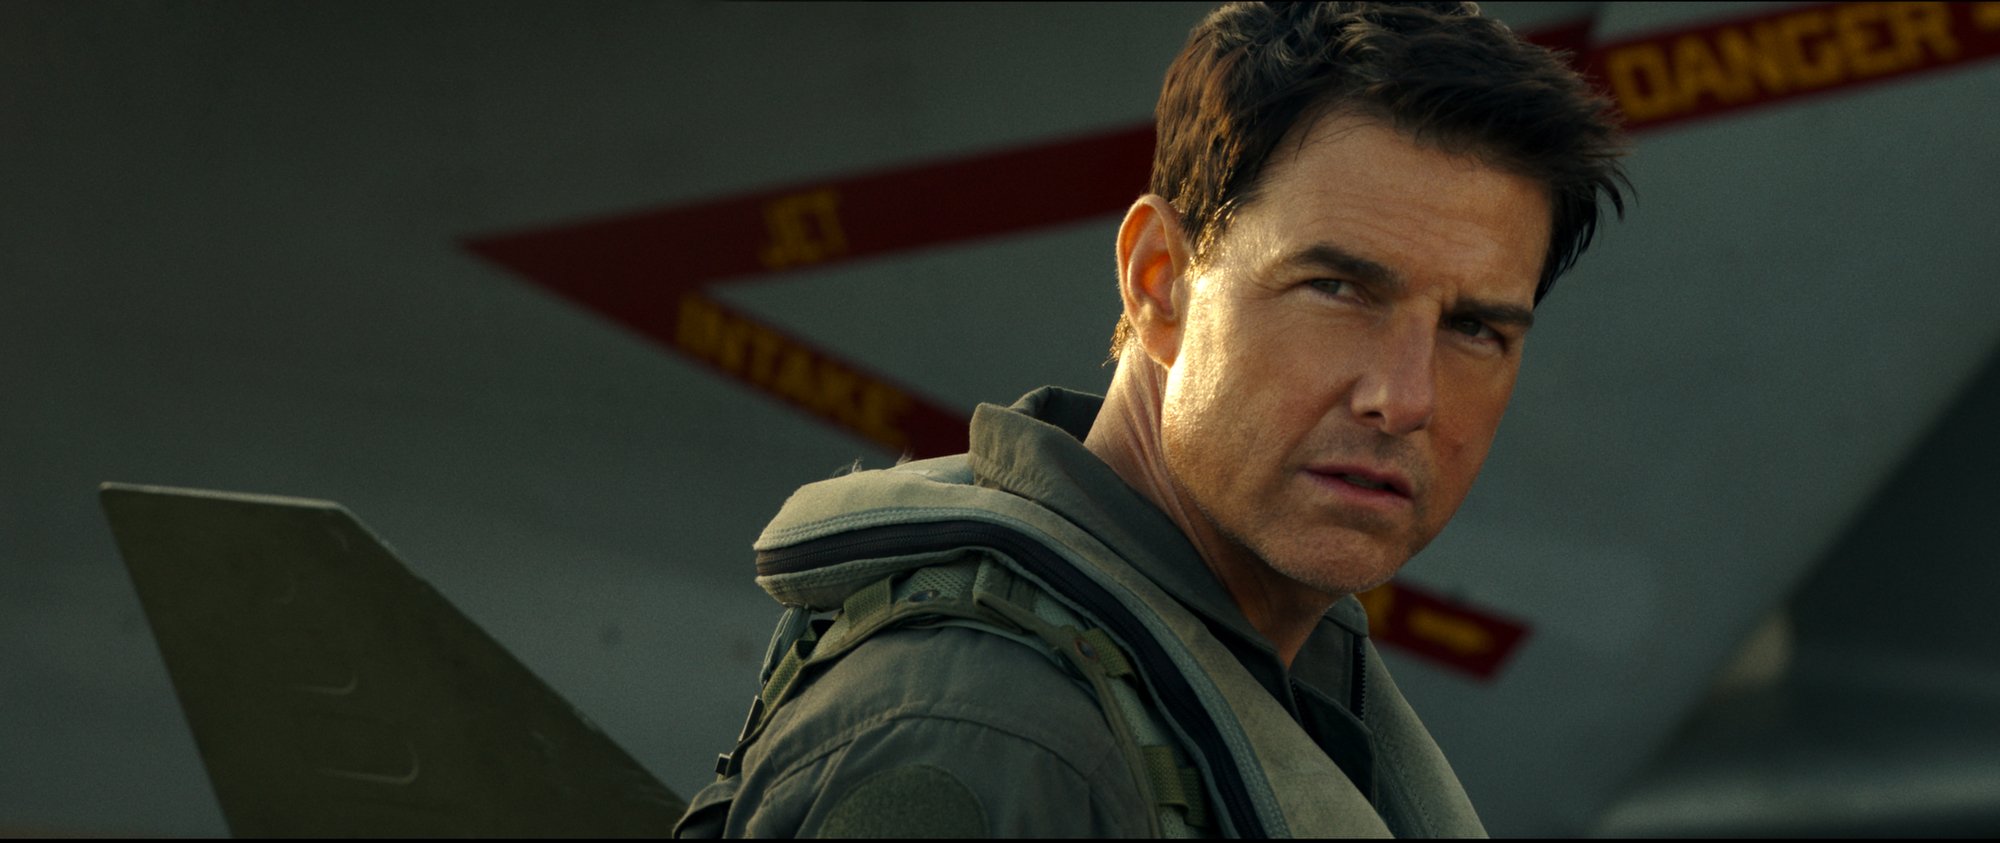 'Top Gun: Maverick' Tom Cruise as Maverick wearing a uniform with a serious look on his face